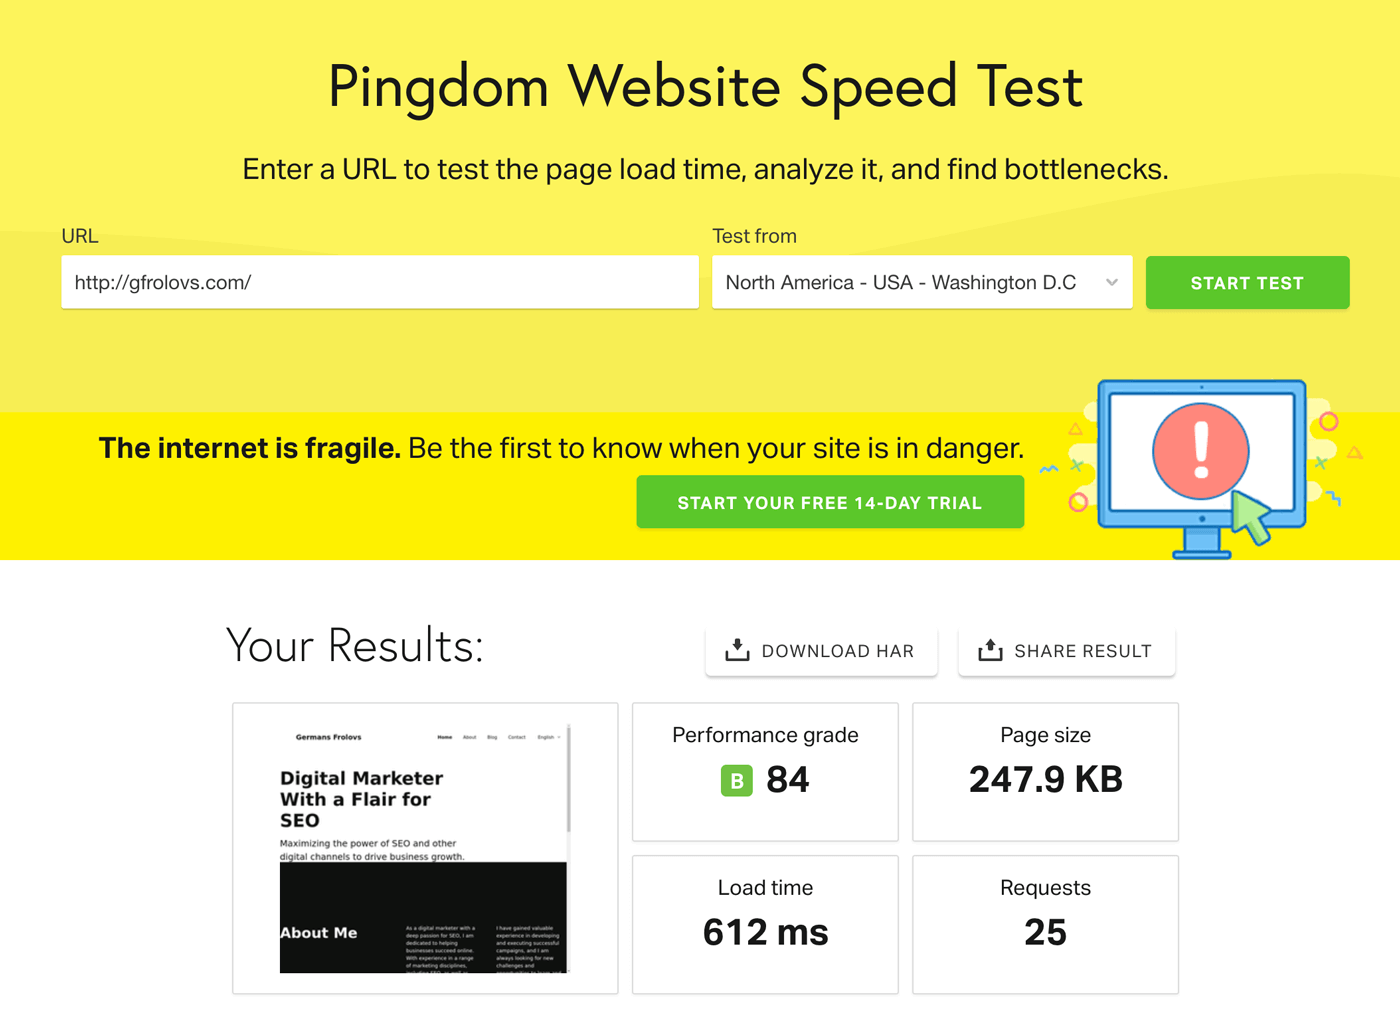 Pingdom Website Speed Test Results